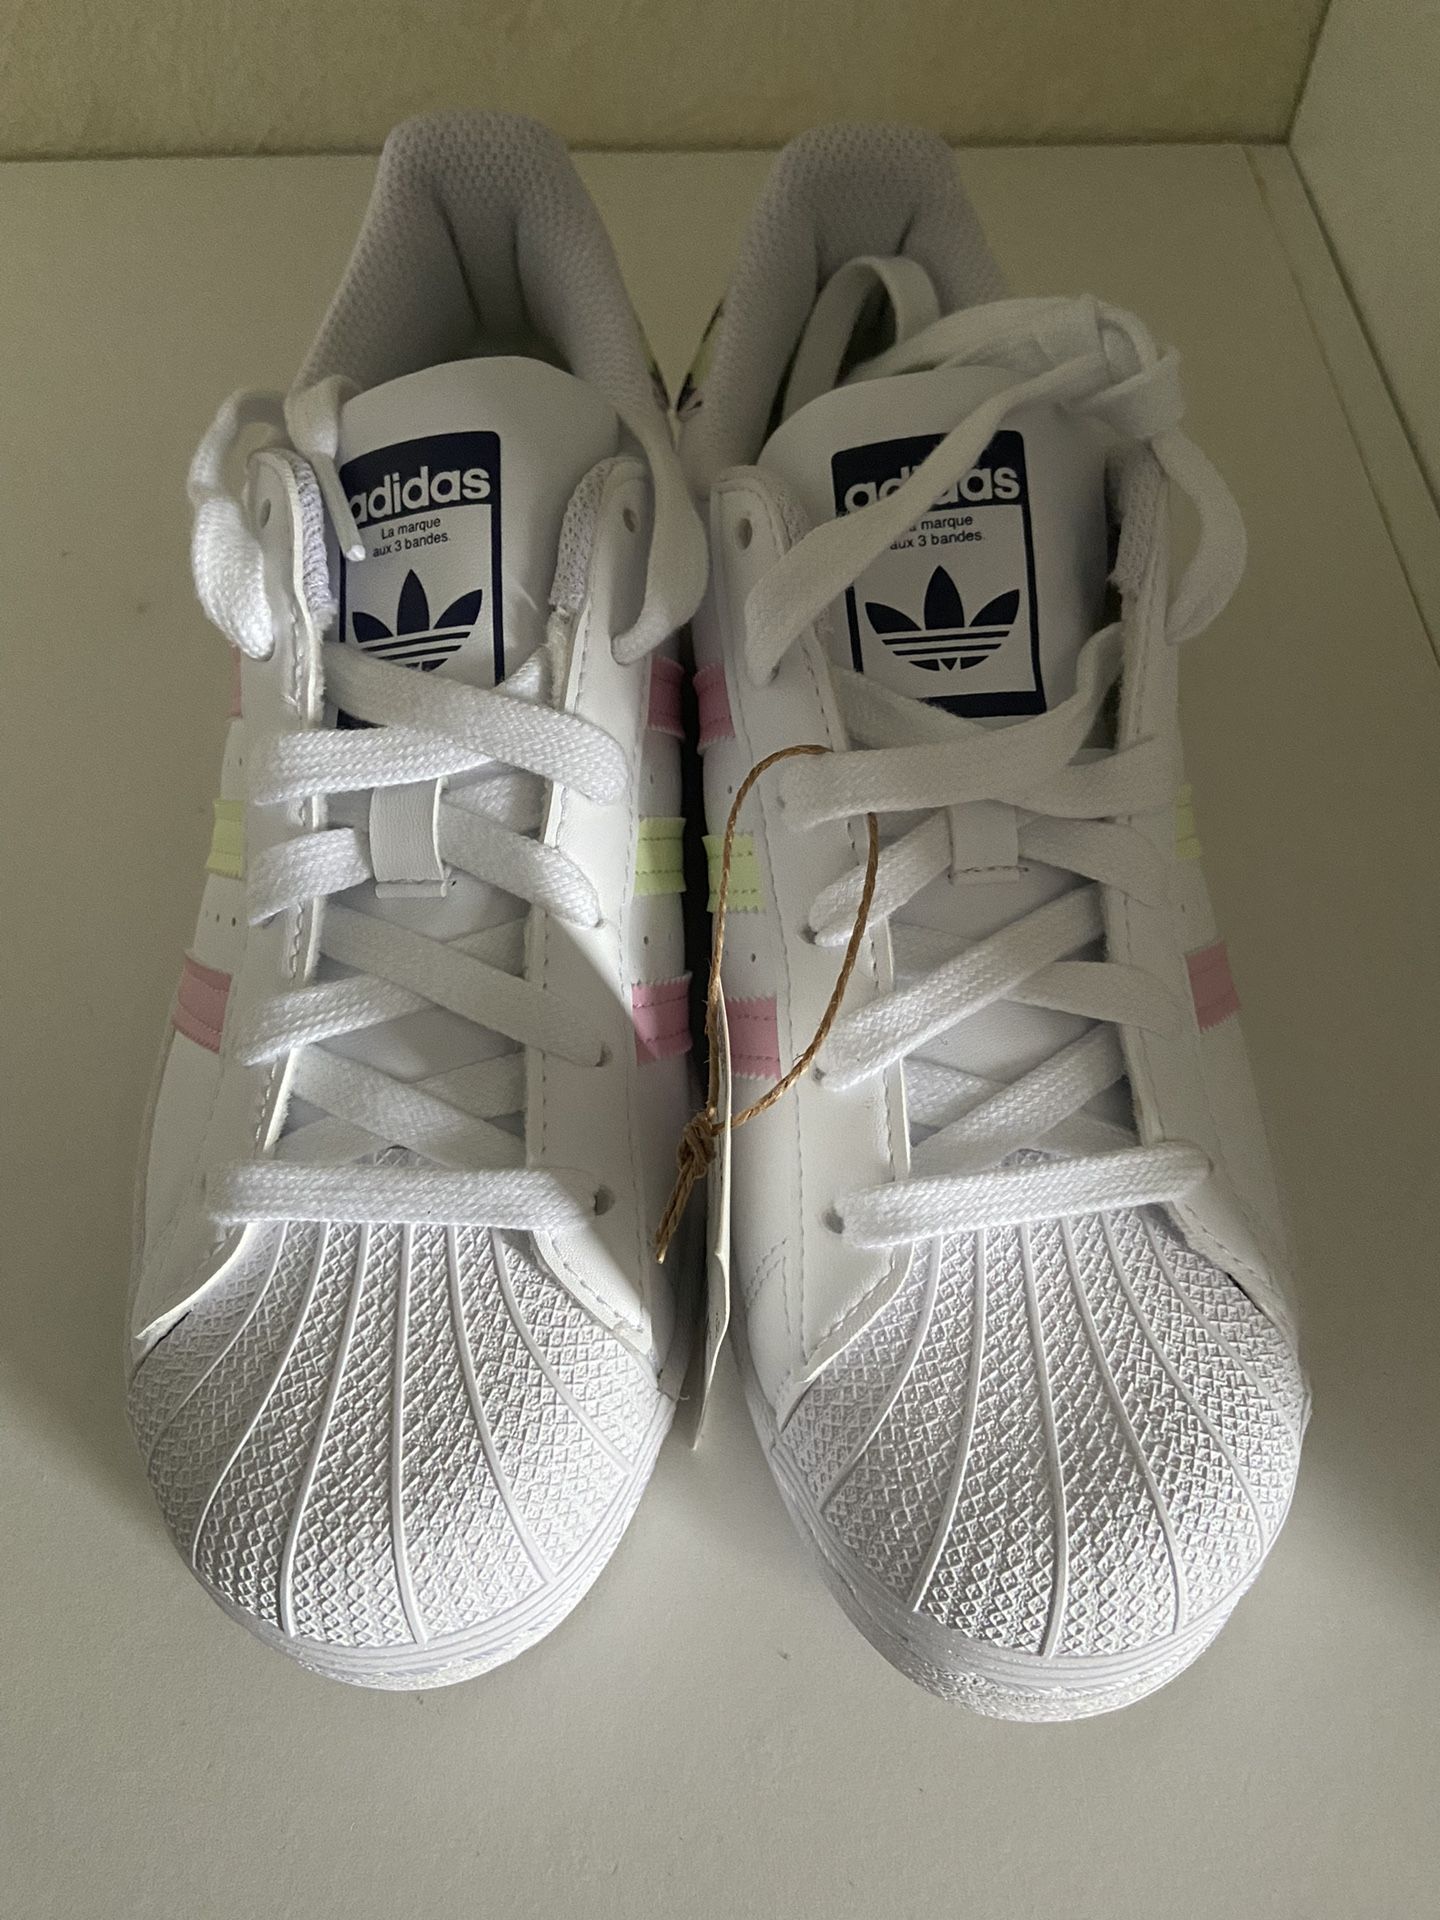 Adidas Superstar j Shoes Size 5 1/2